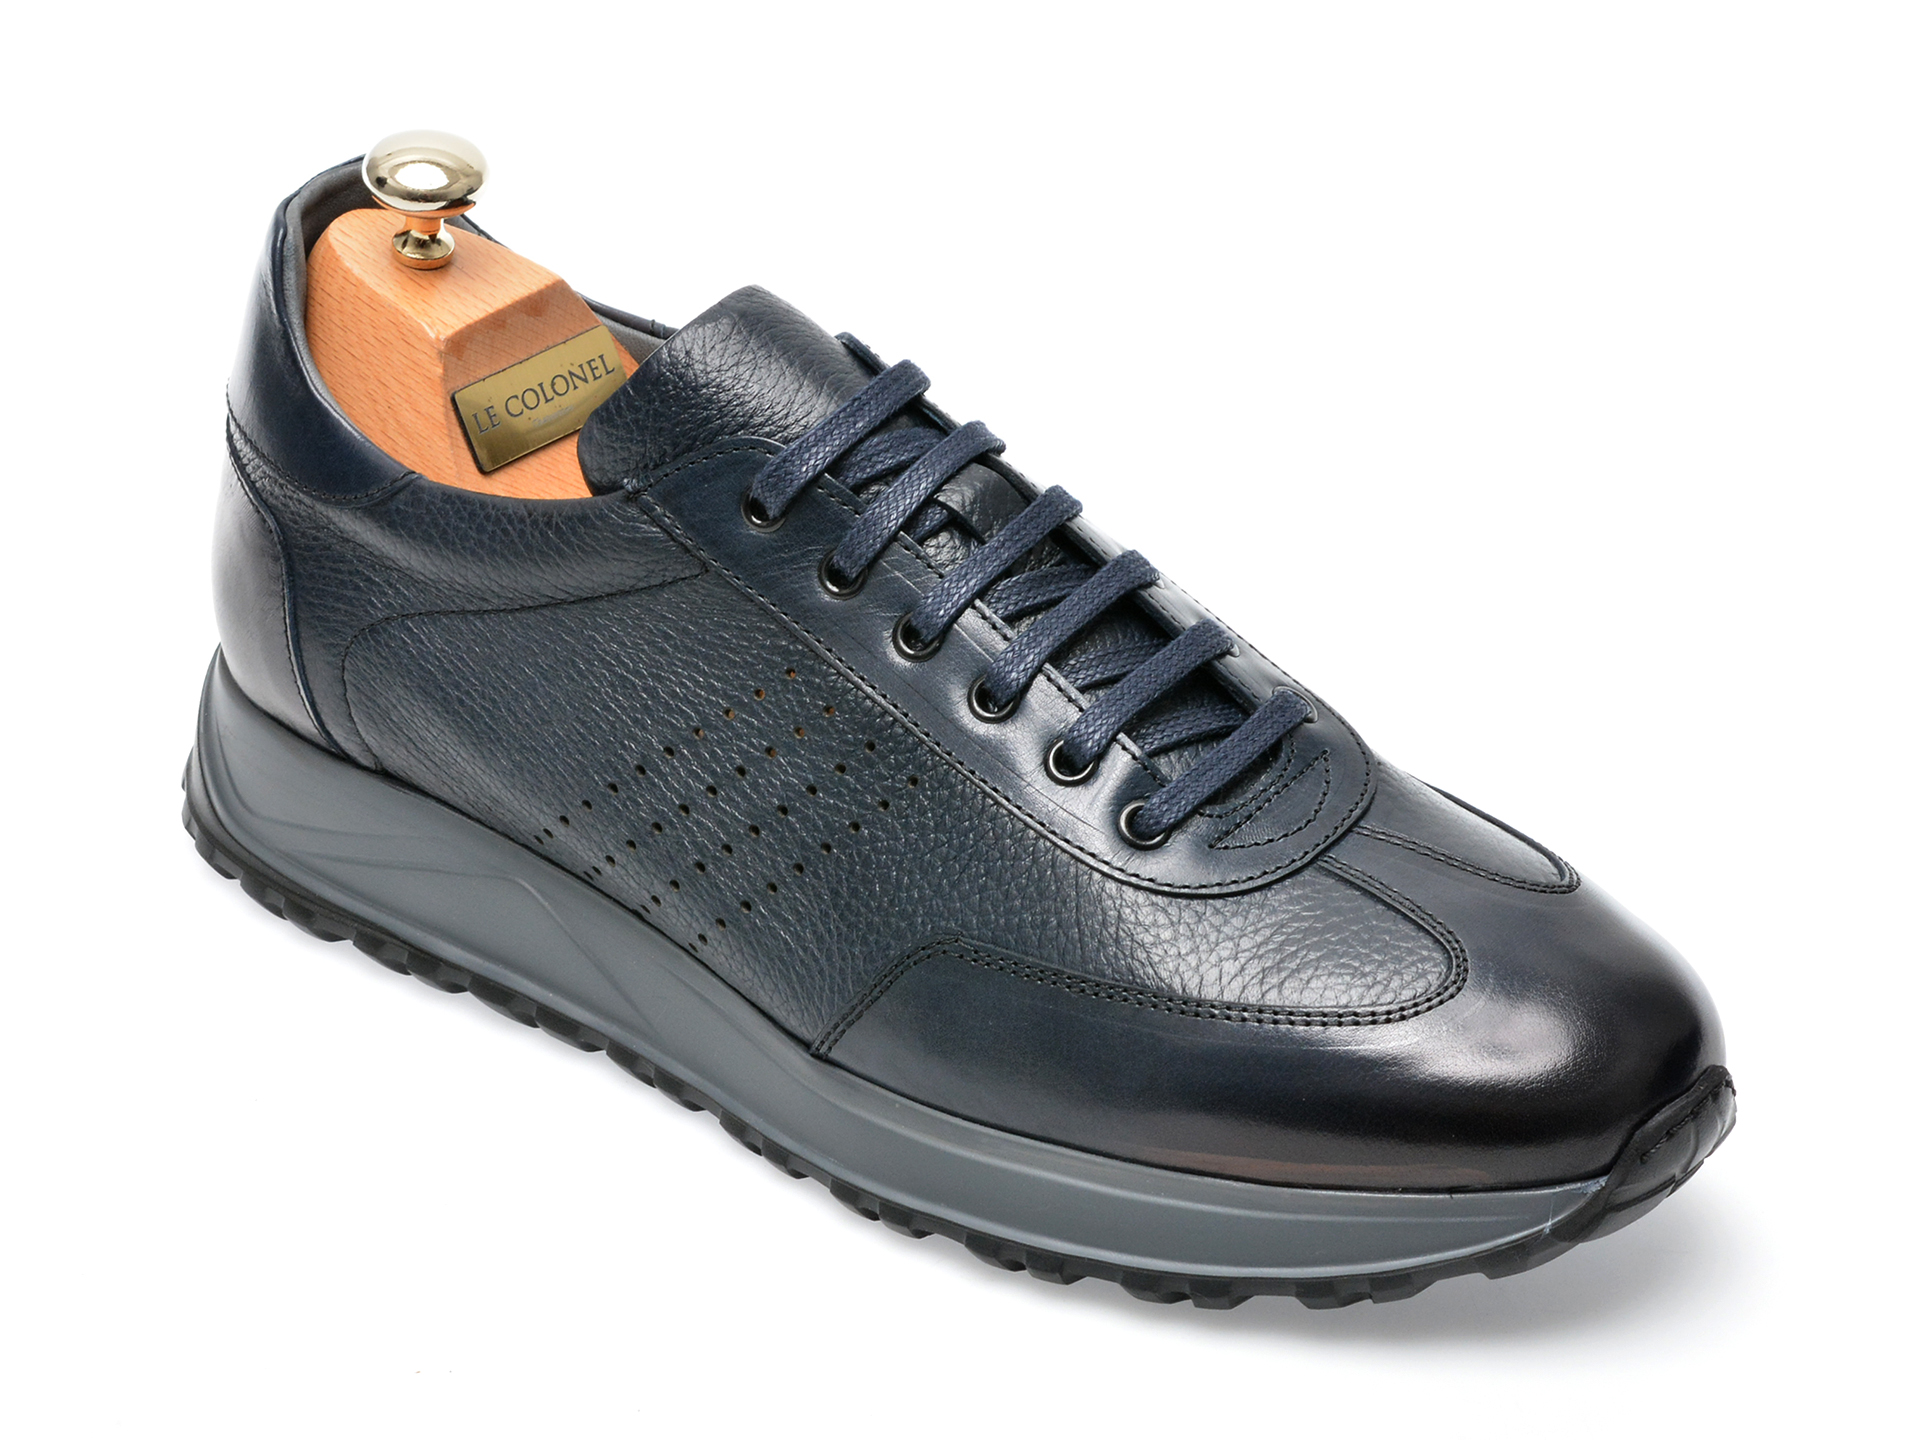 Pantofi LE COLONEL bleumarin, 62818, din piele naturala Le Colonel